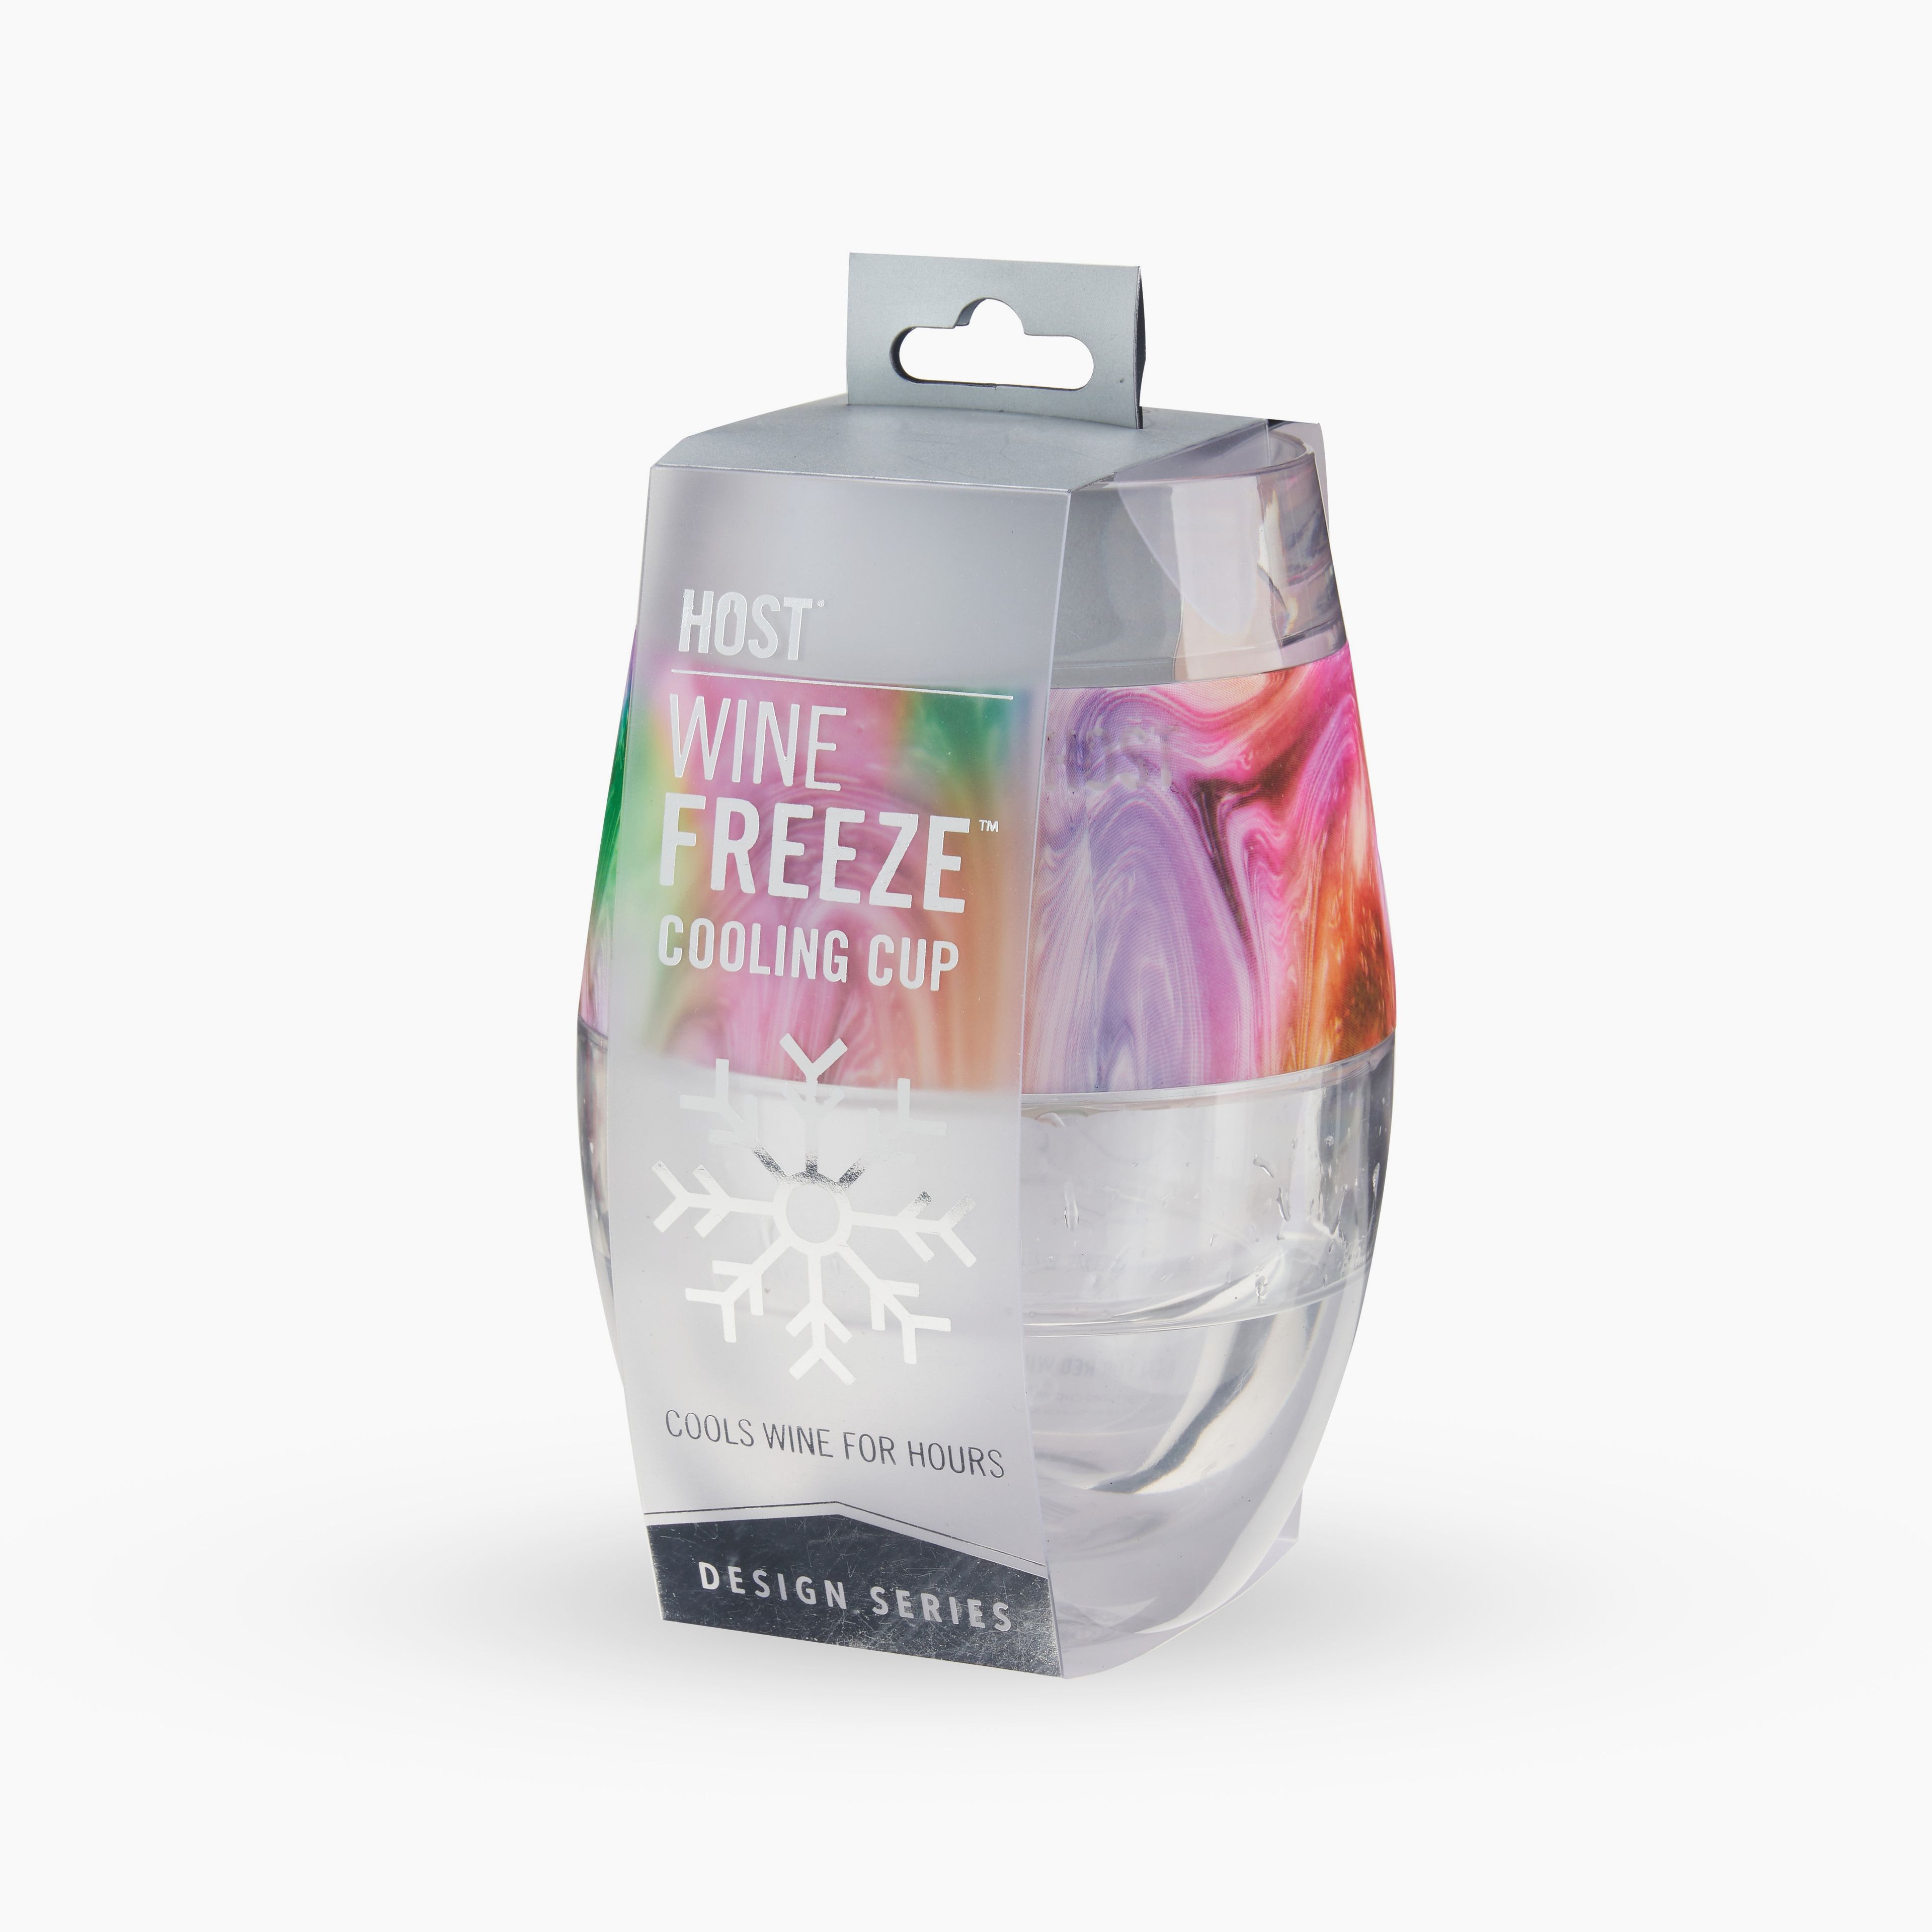 Wine FREEZE Cooling Cup in Unicorn Swirl